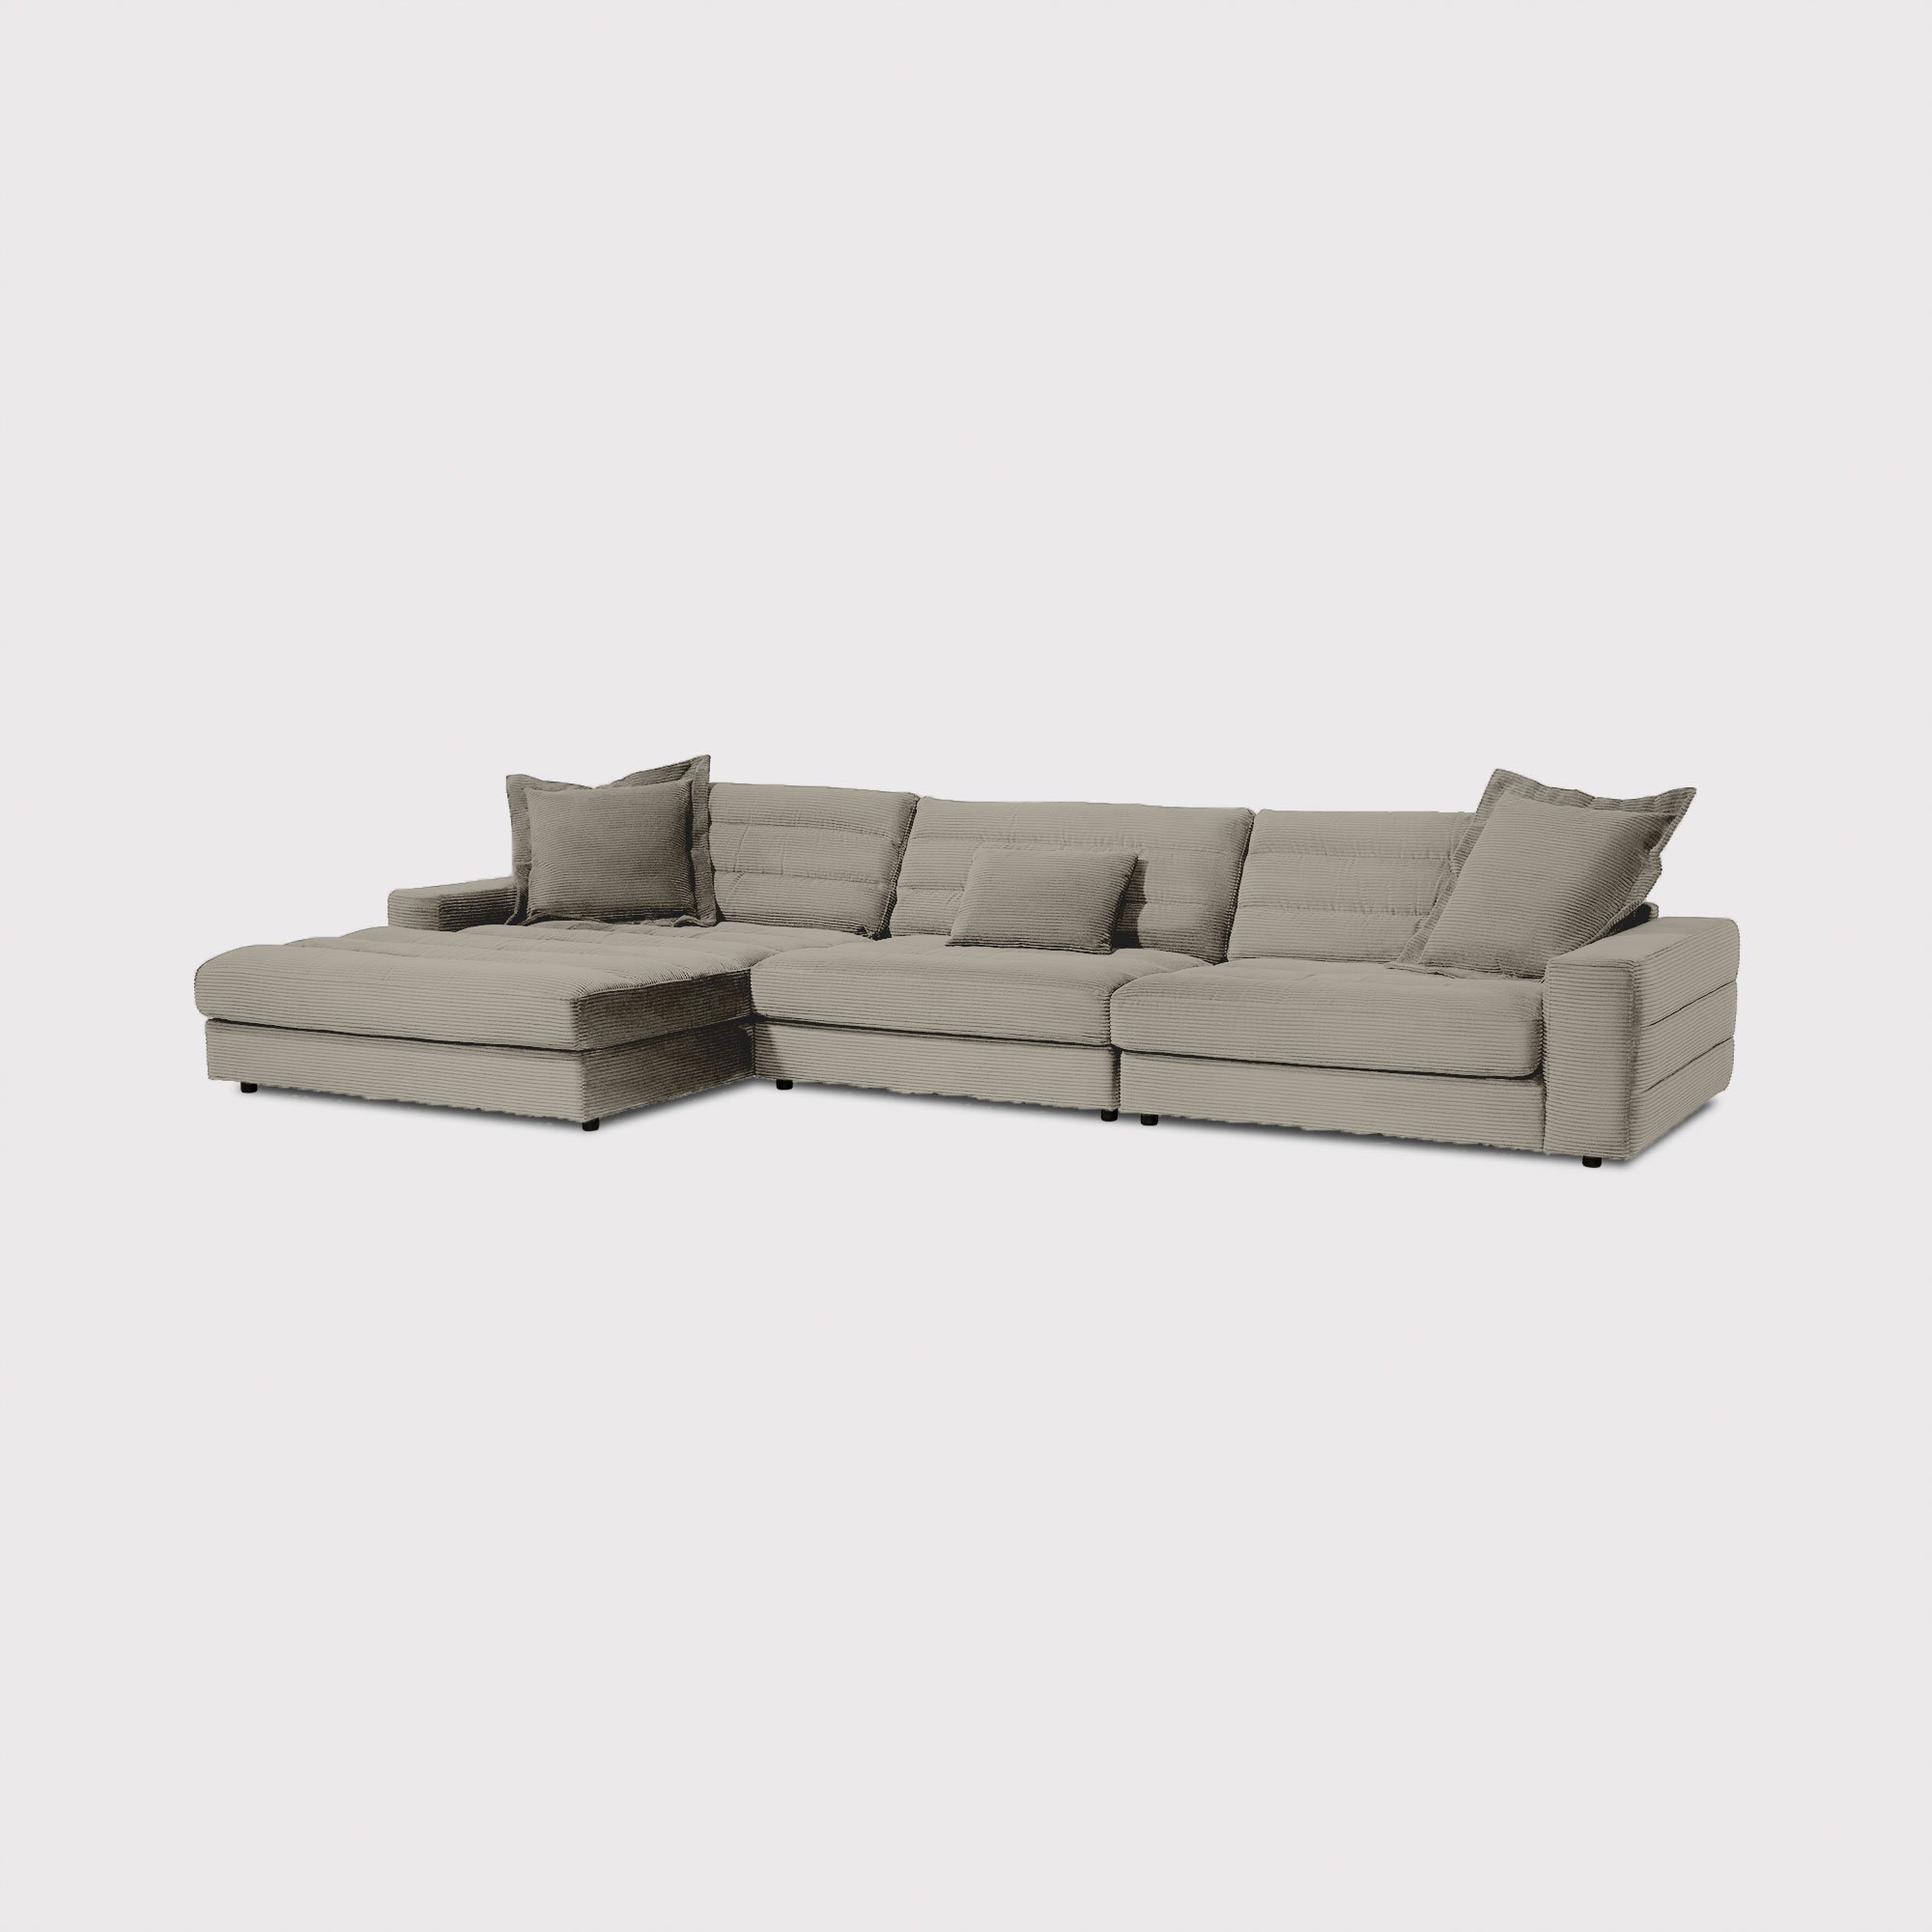 Twain Large Chaise Sofa Left, Grey Fabric | Barker & Stonehouse